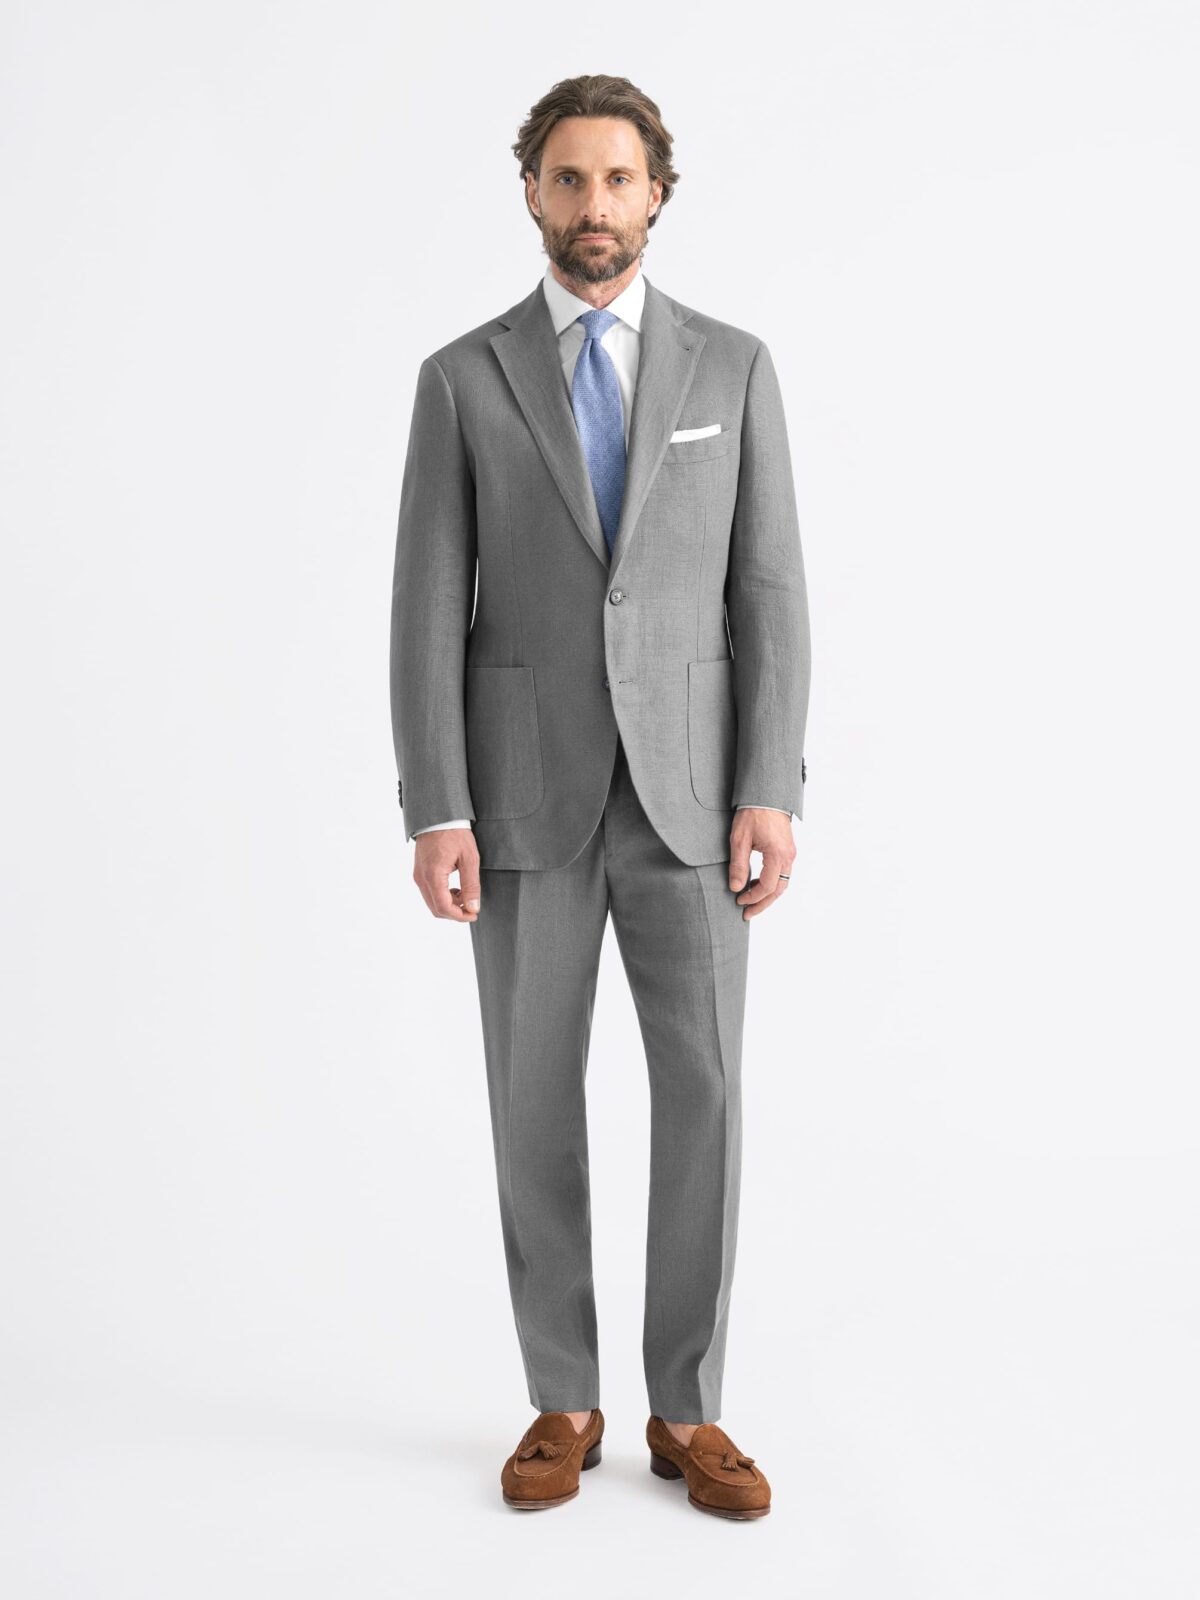 Aggregate more than 227 gray linen suit super hot